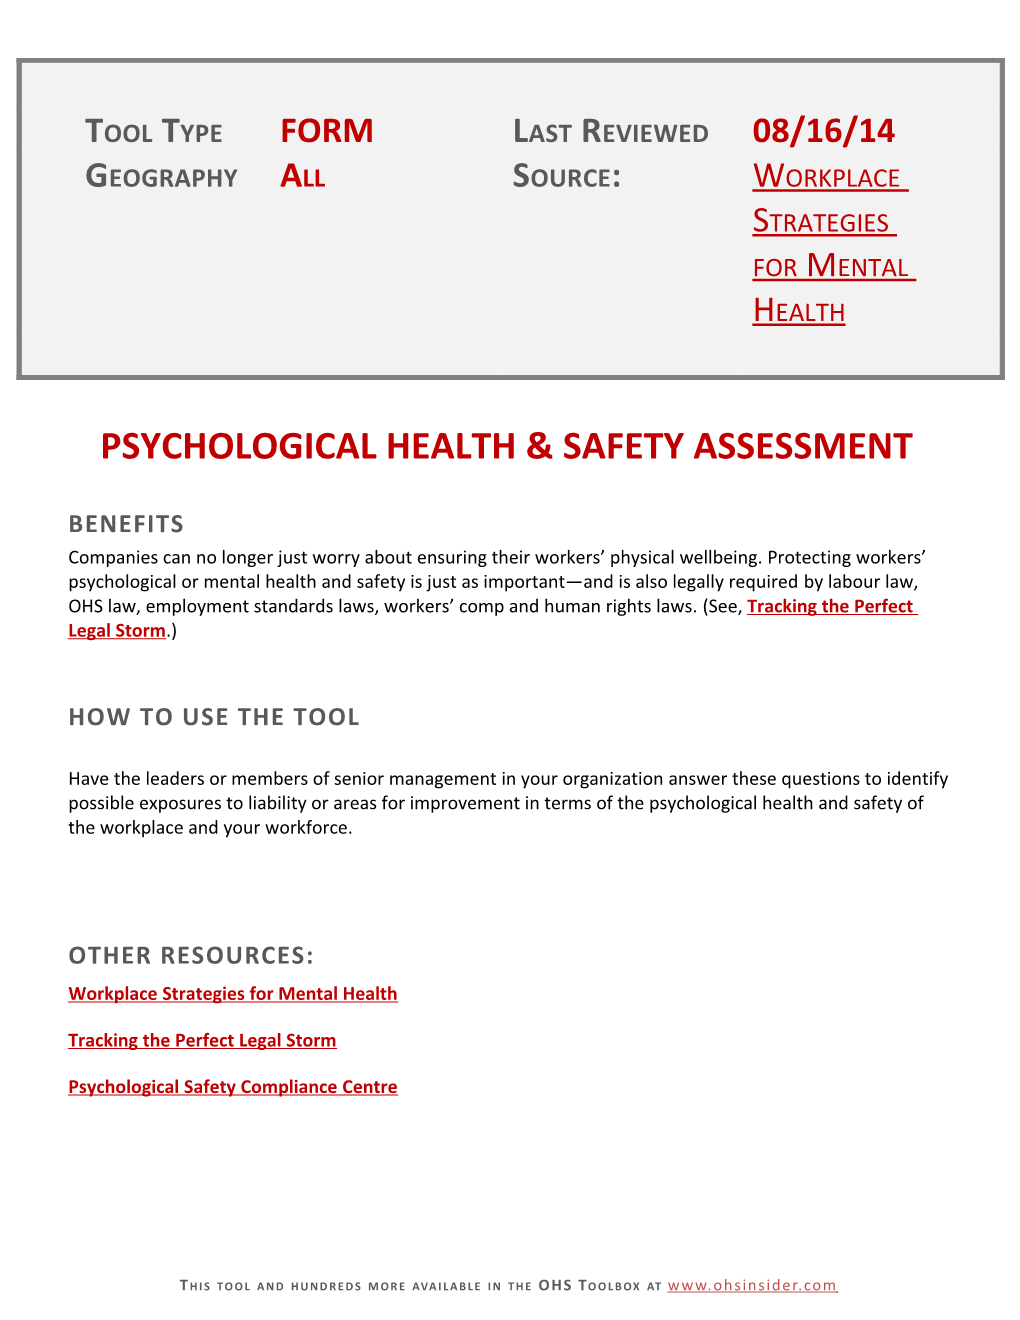 Psychological Health & Safety Assessment